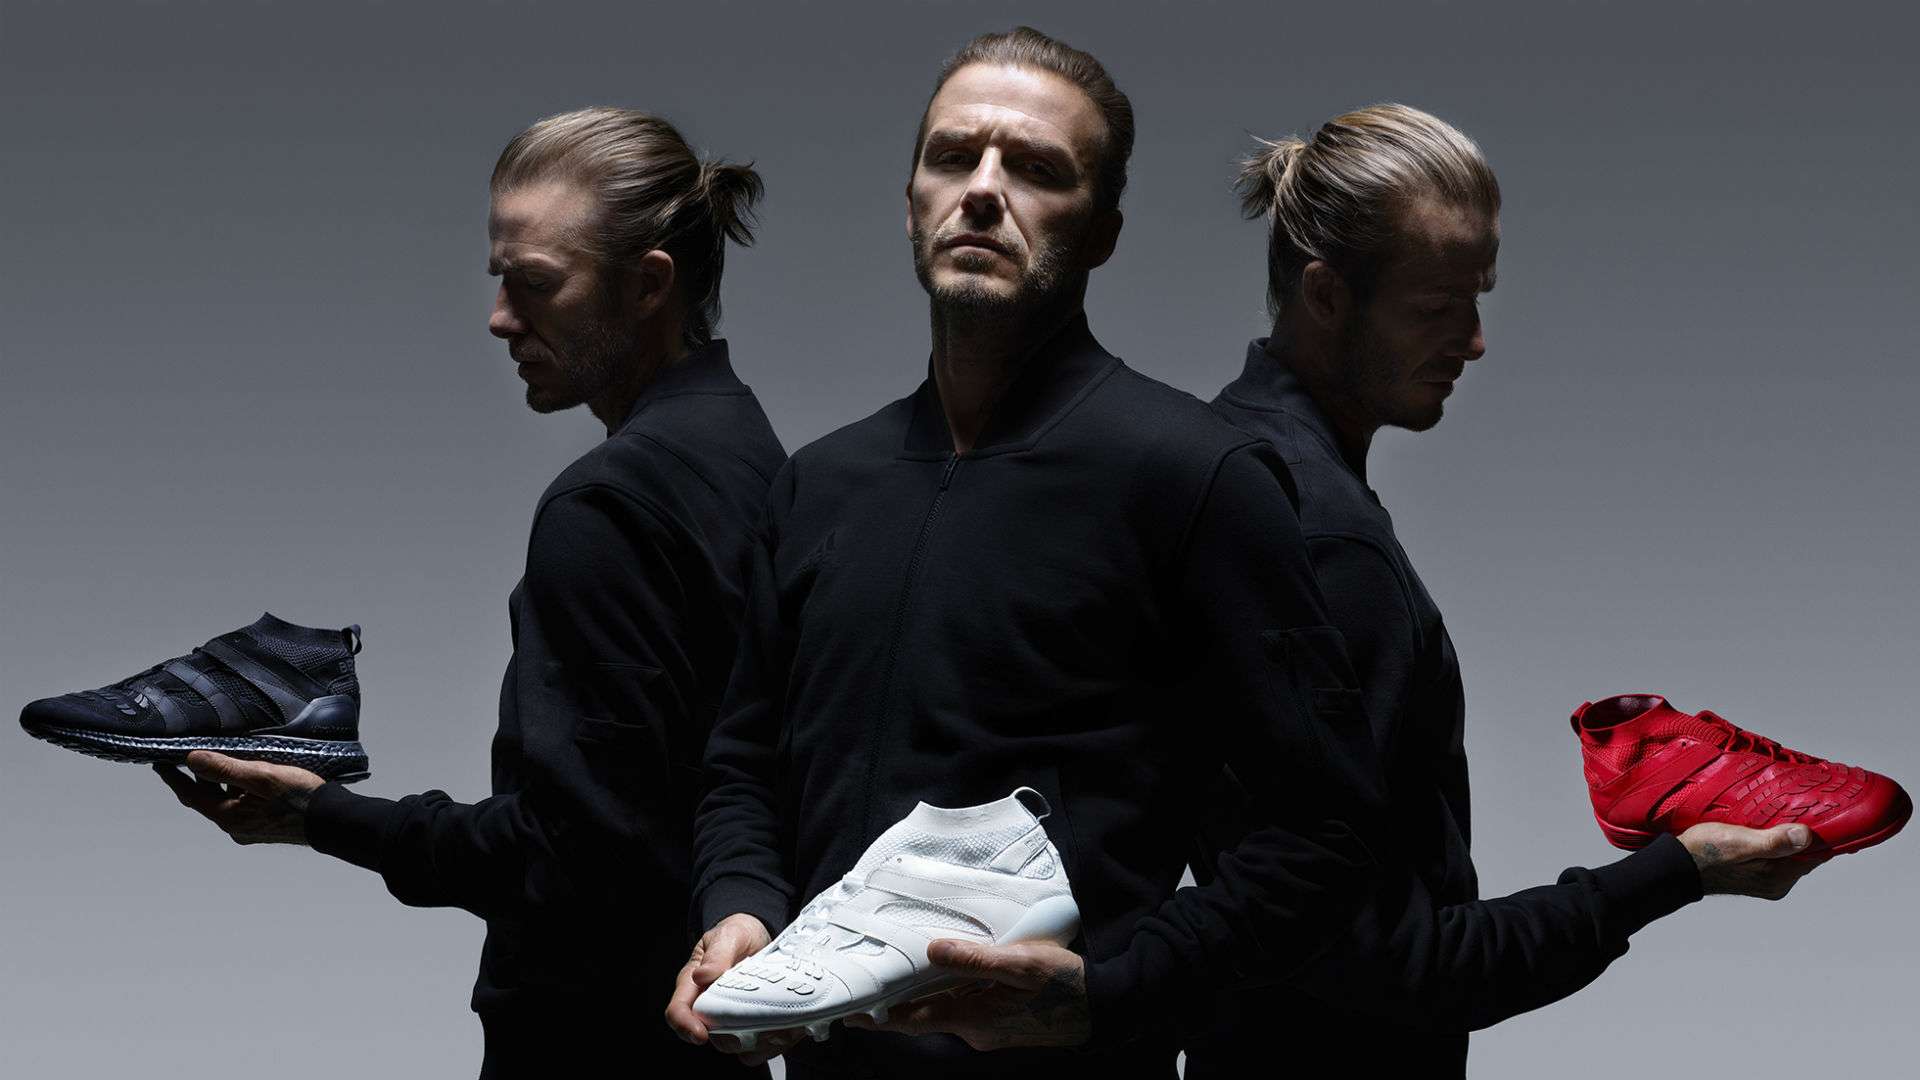 Adidas David Beckham Capsule Collection